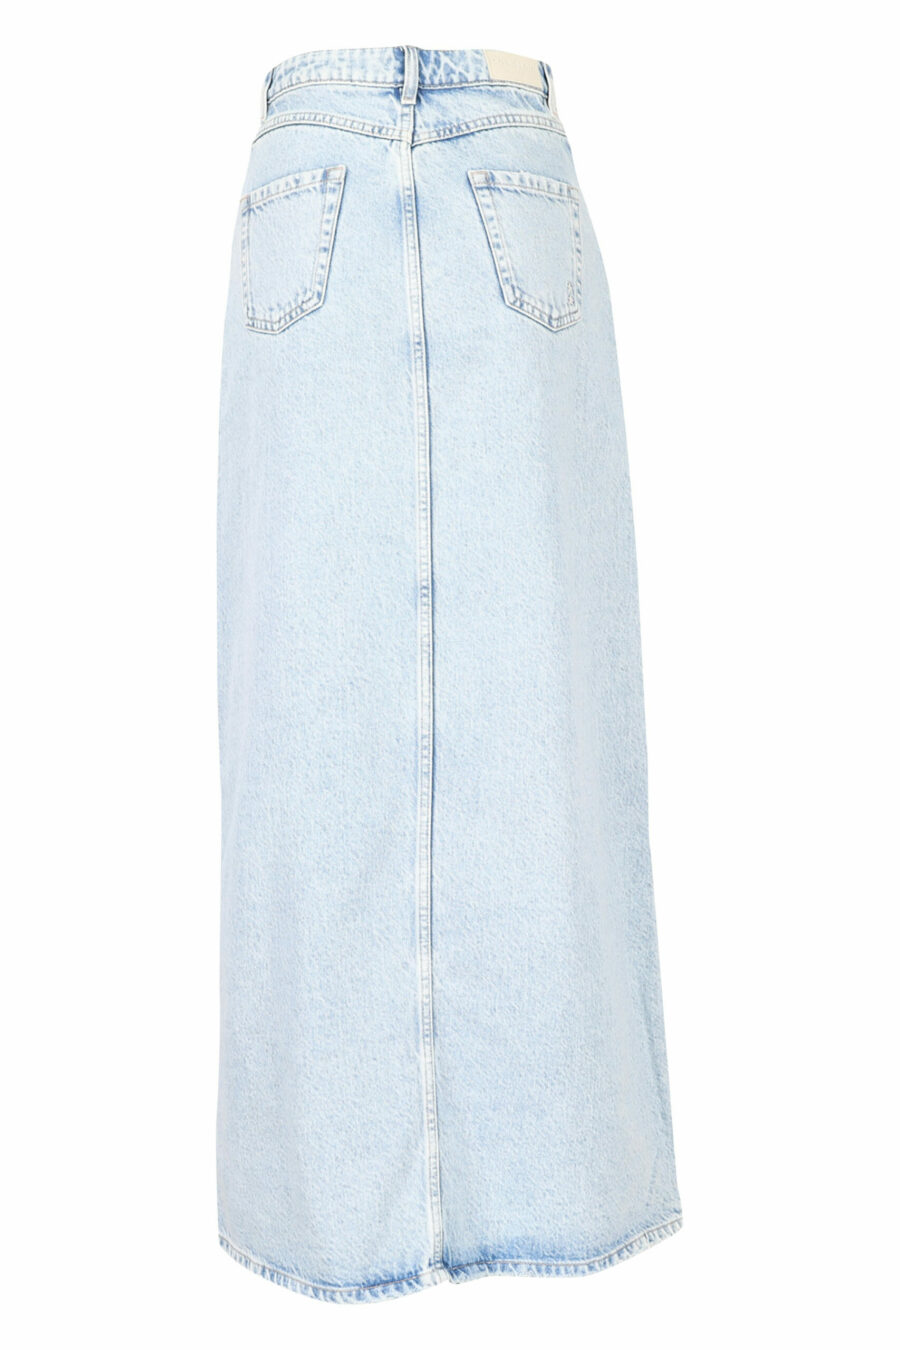 Long blue denim skirt "lara" with slit - 8052691166819 2 scaled